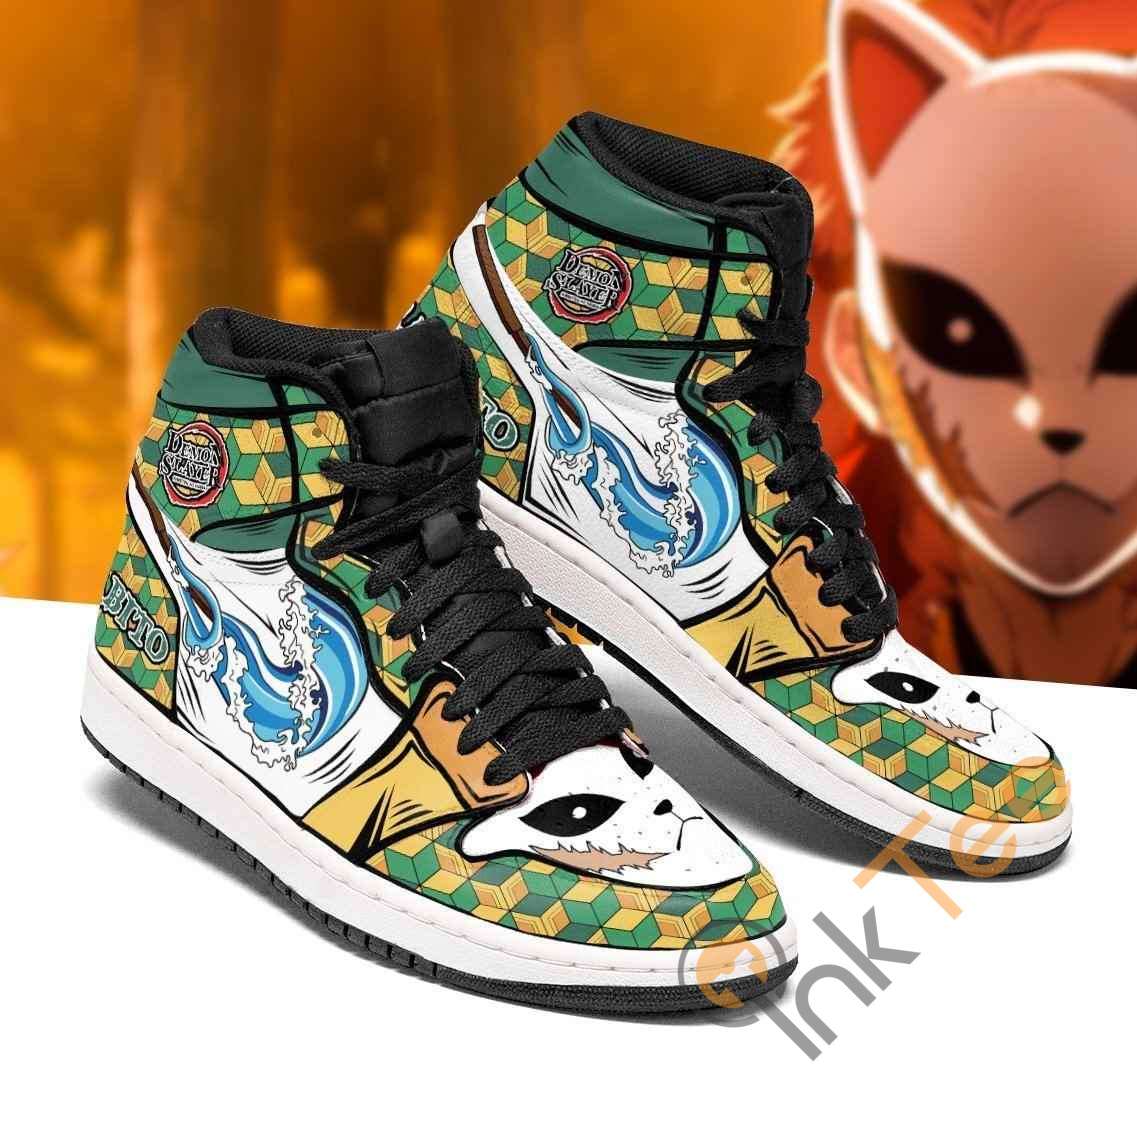 برادة ماء خزان داخلي Sabito Costume Demon Slayer Sneakers Anime Air Jordan Shoes ... برادة ماء خزان داخلي